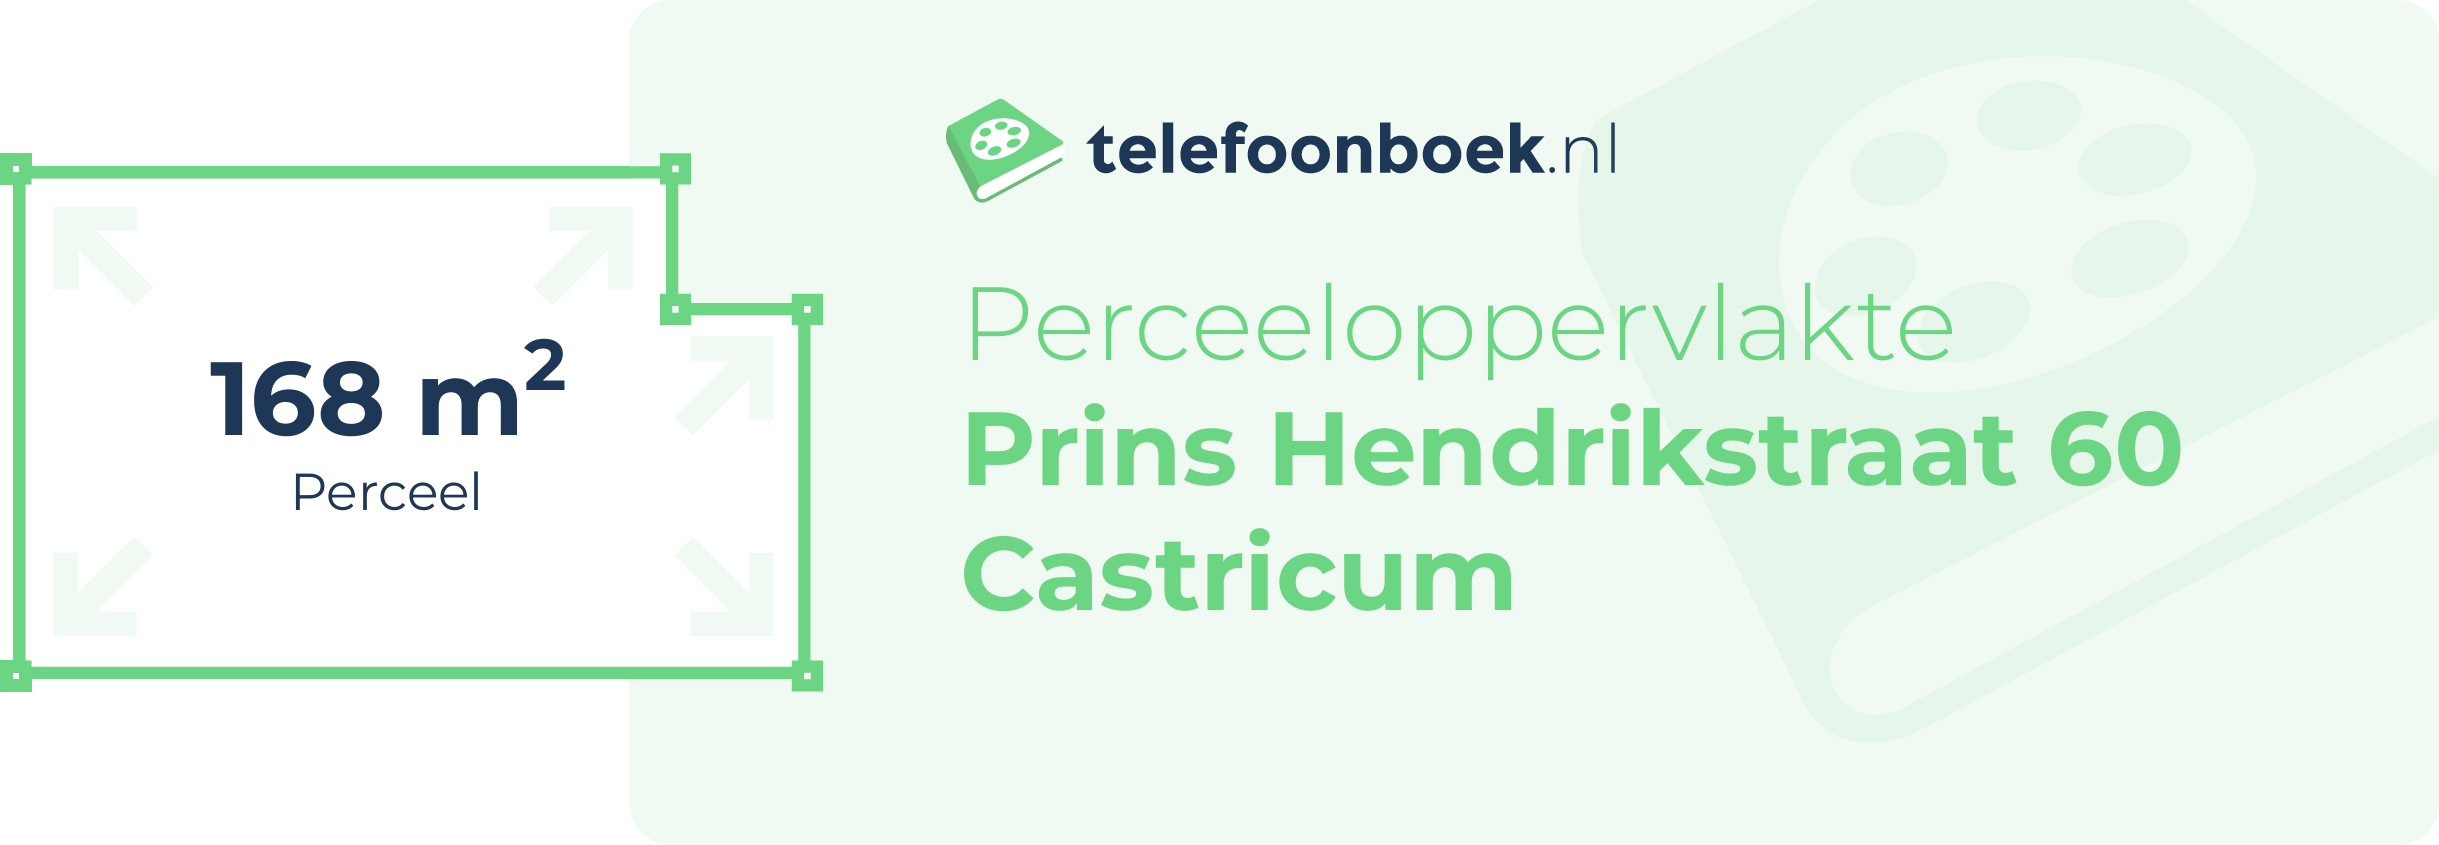 Perceeloppervlakte Prins Hendrikstraat 60 Castricum